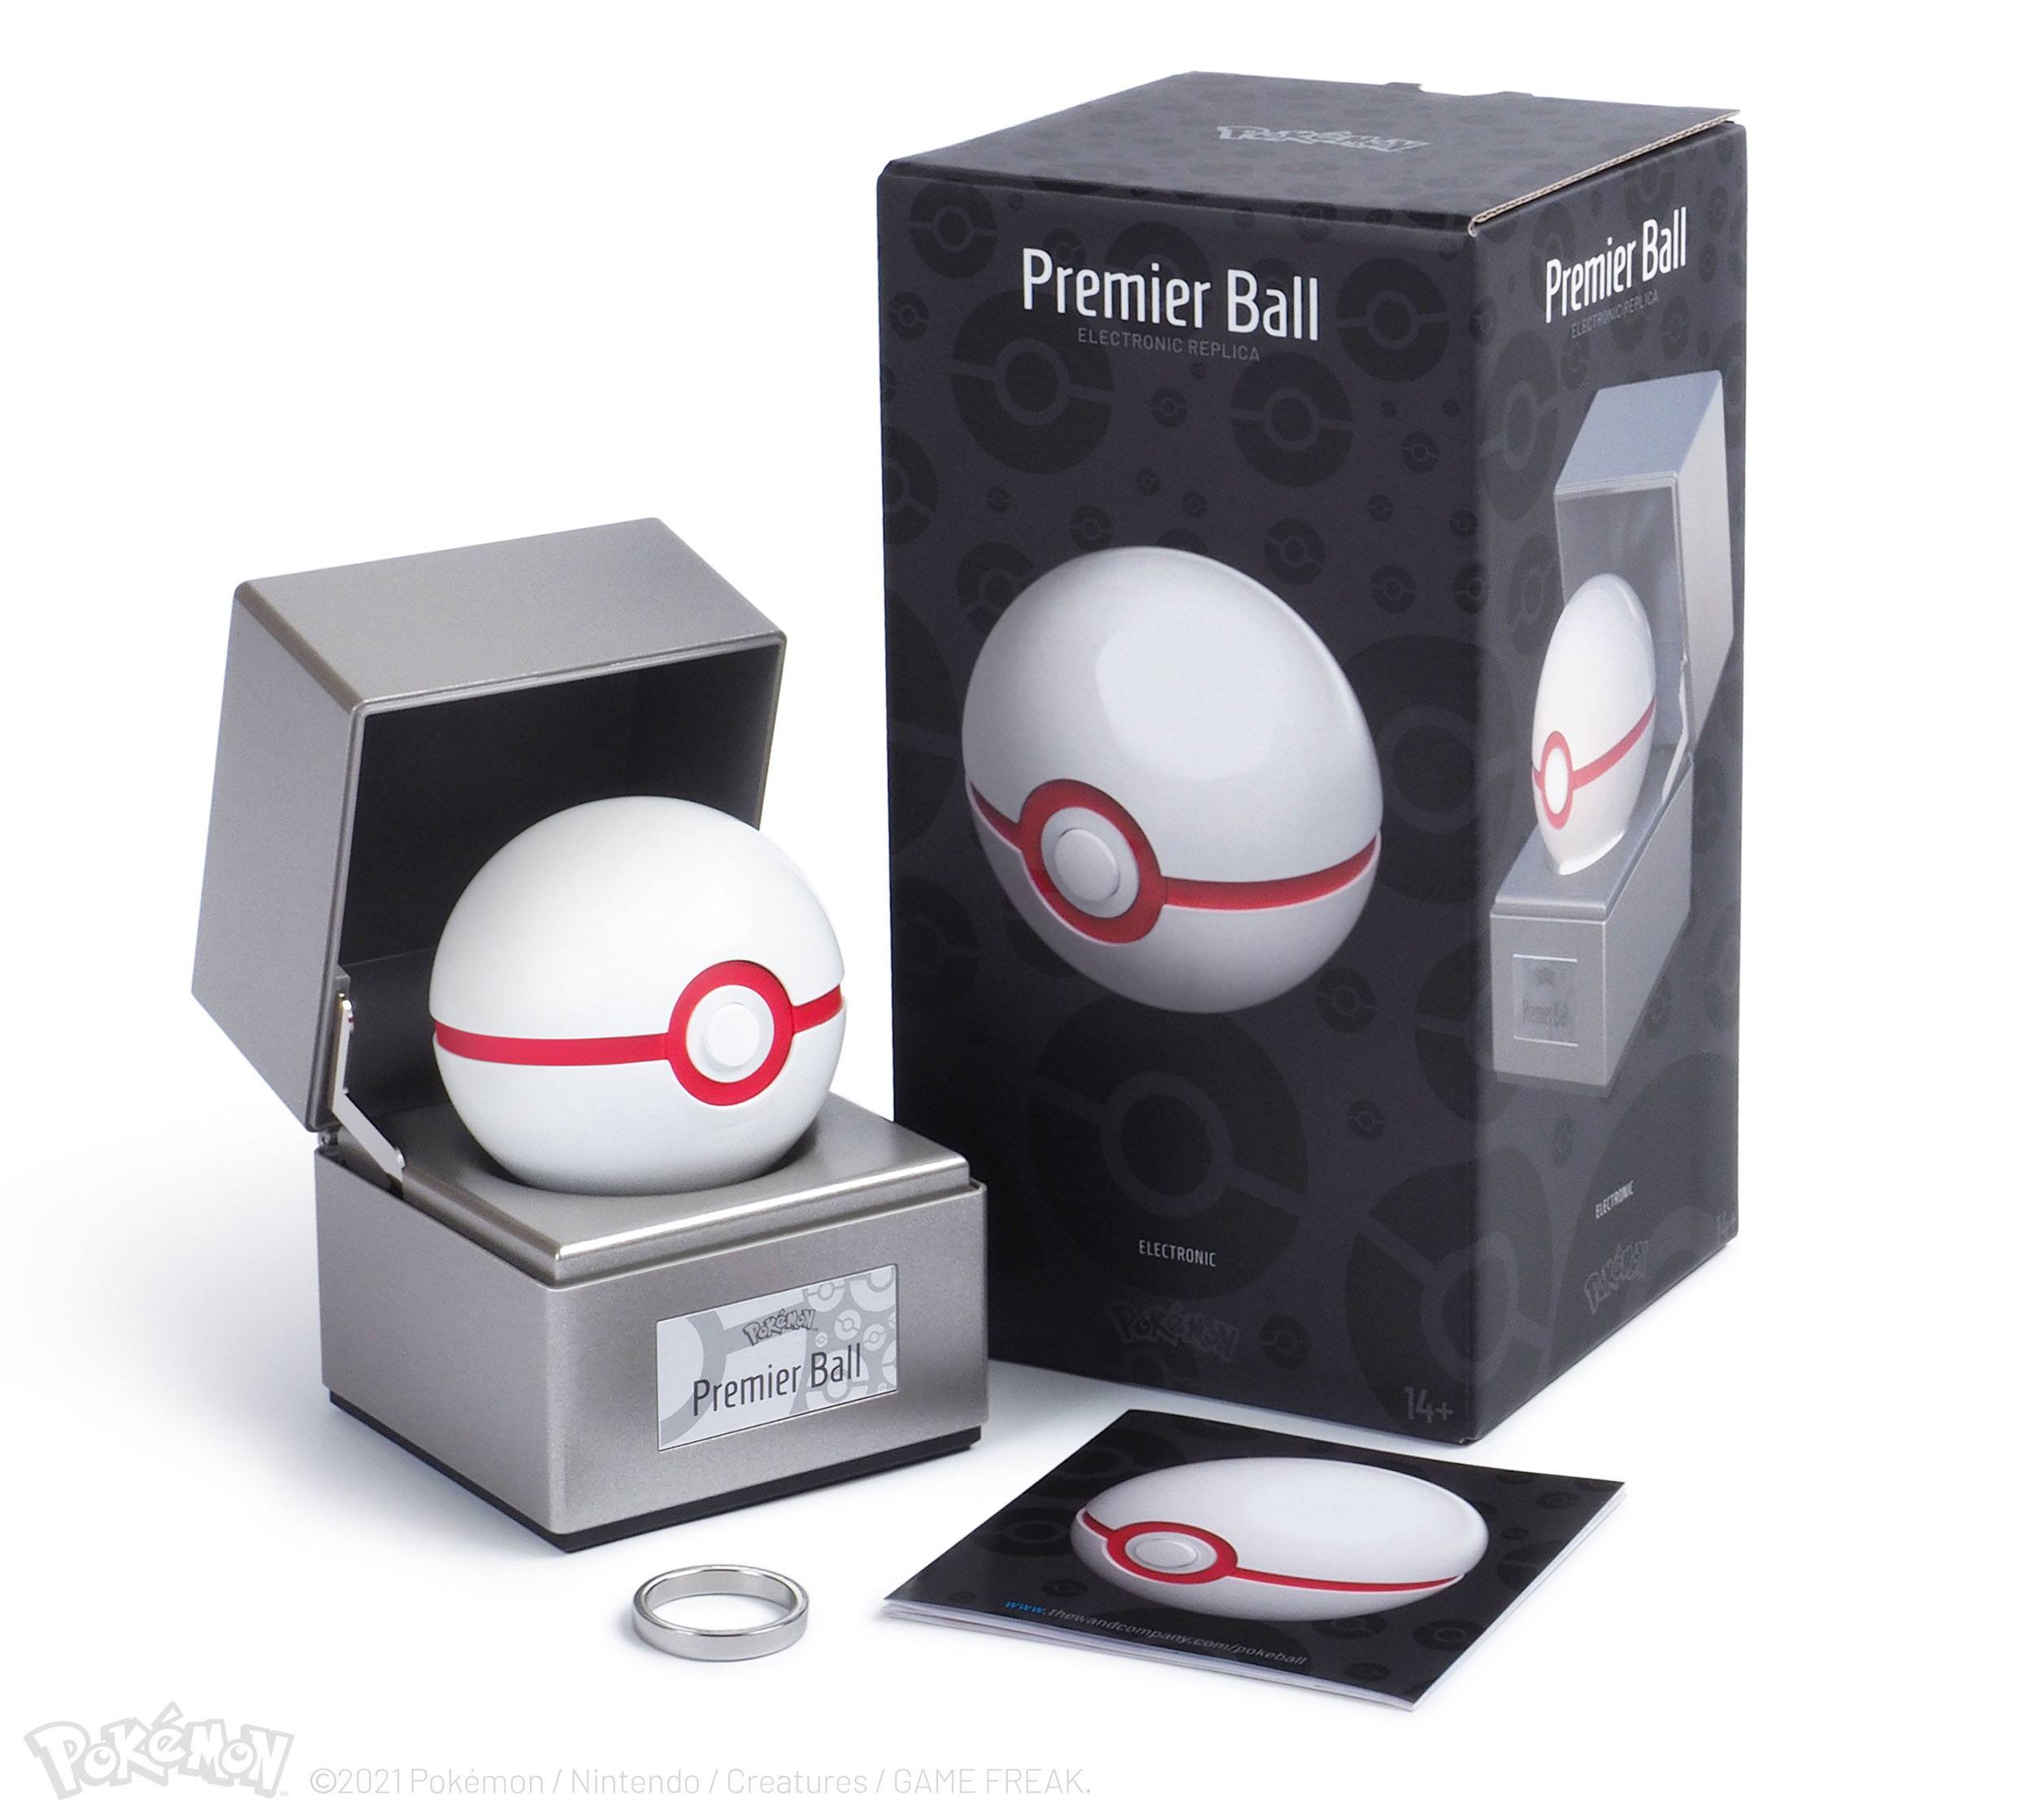 Pokémon - Premier Ball.